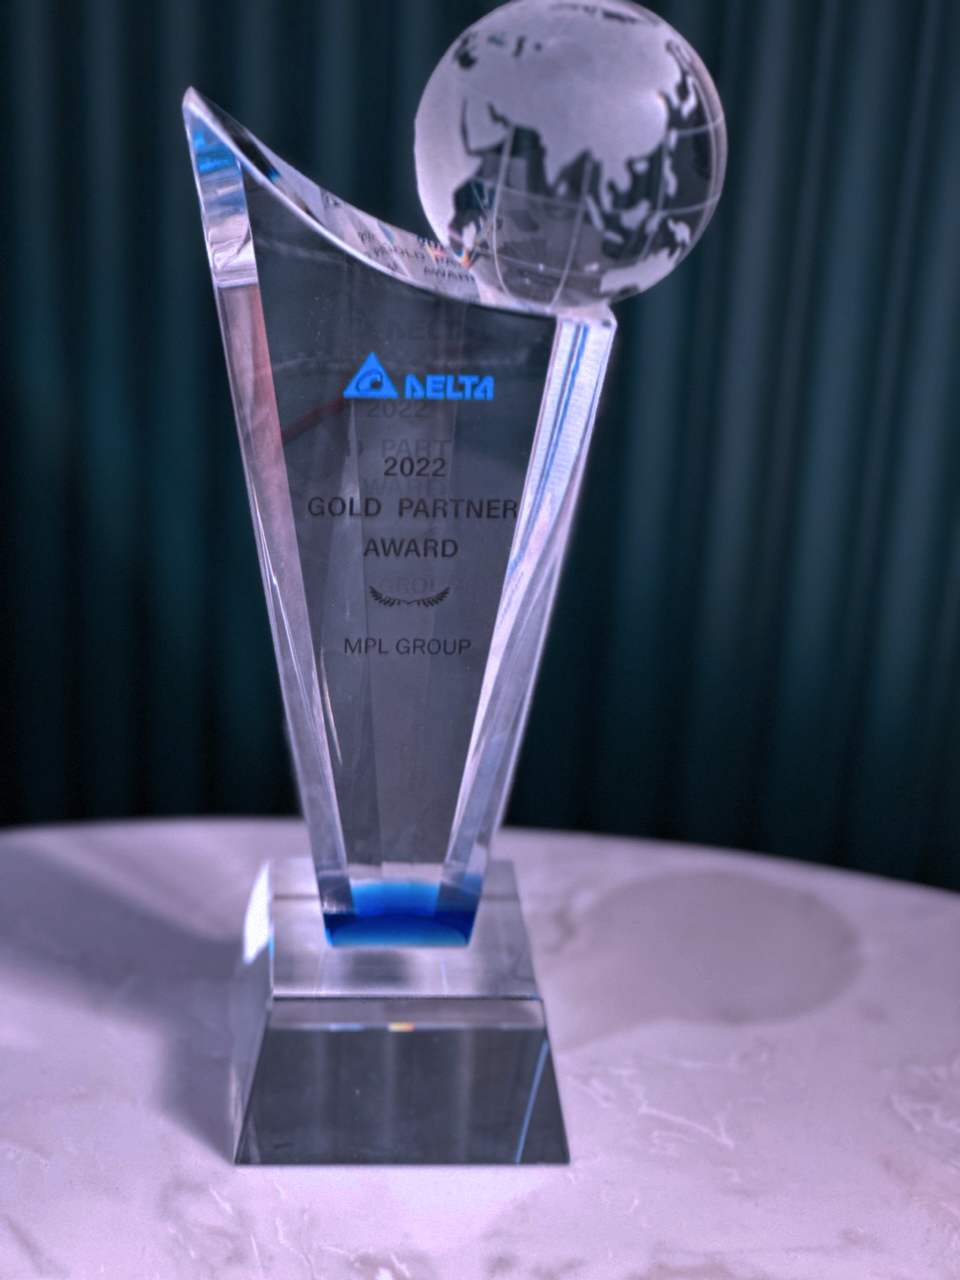 Nagroda Gold Partner Award dla MPL Power Elektro od Delta Electronics